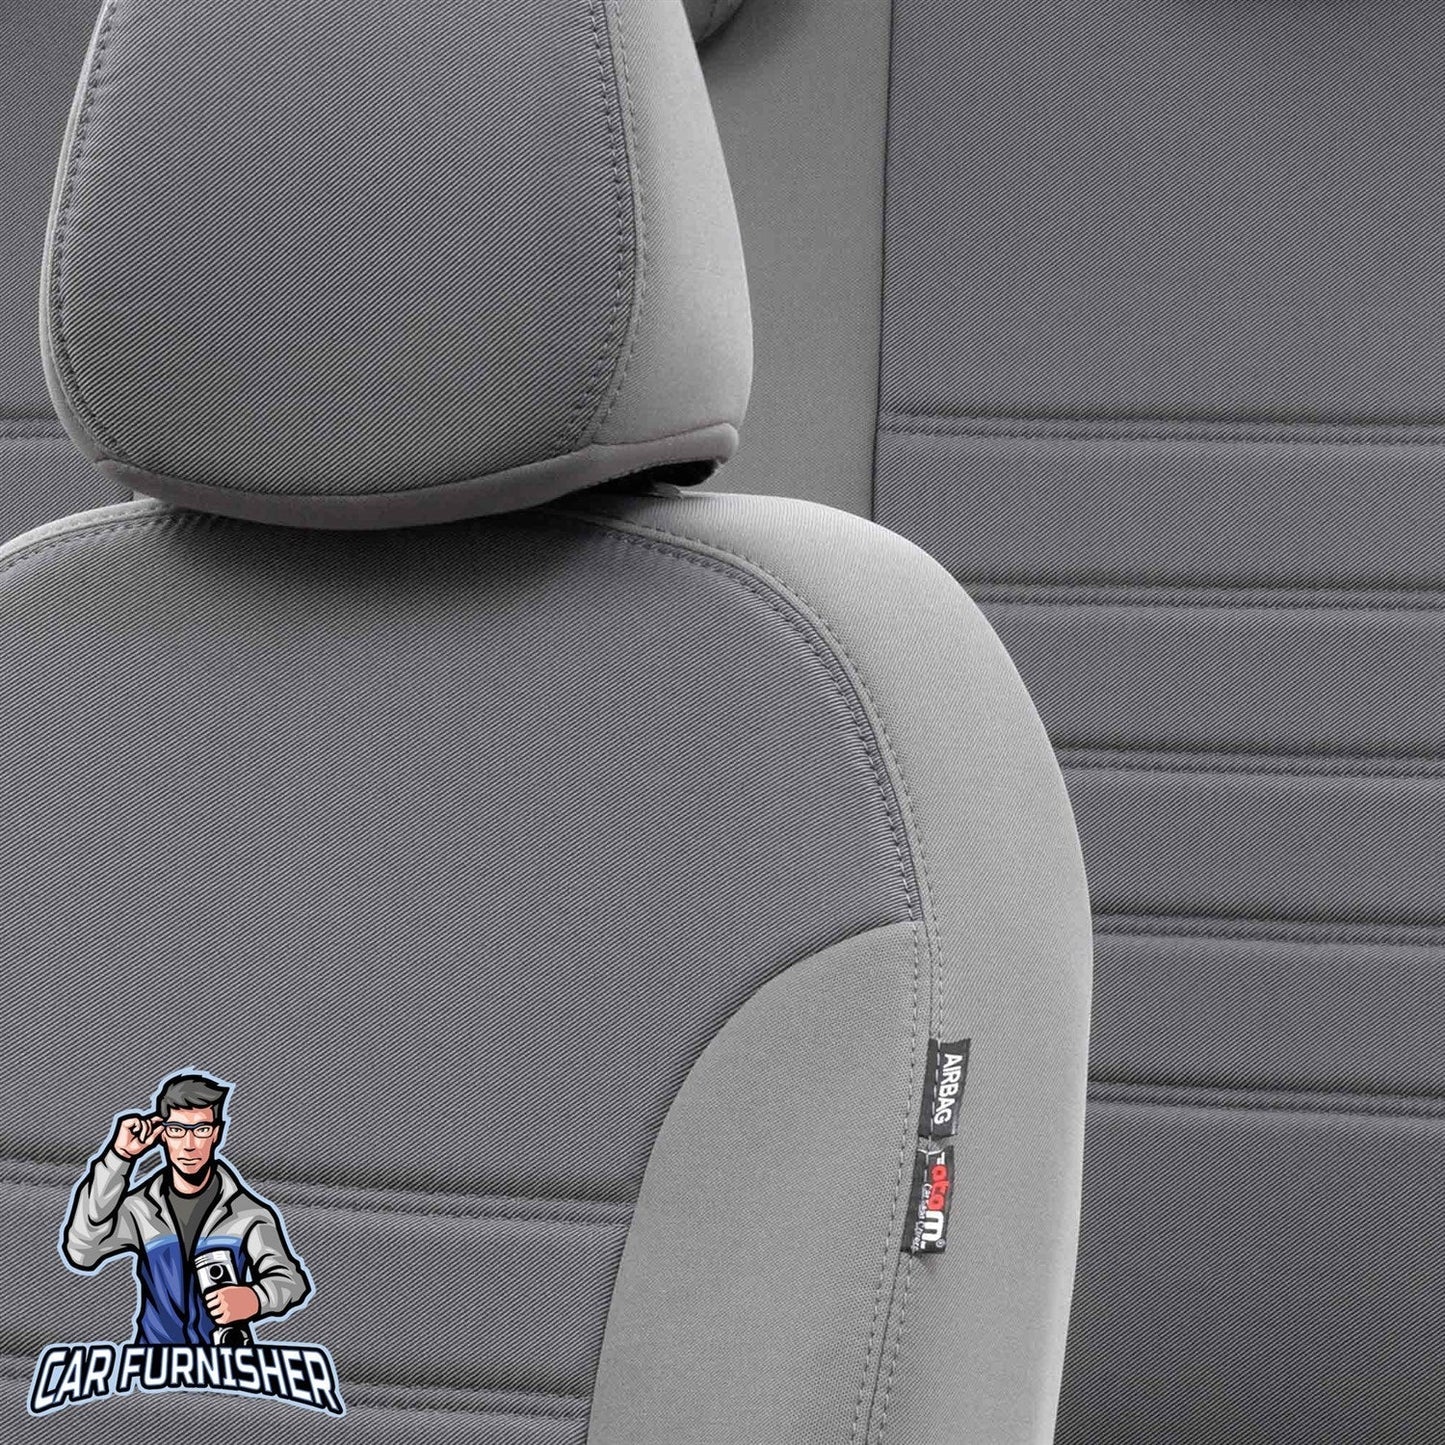 Opel Zafira Seat Covers Original Jacquard Design Gray Jacquard Fabric